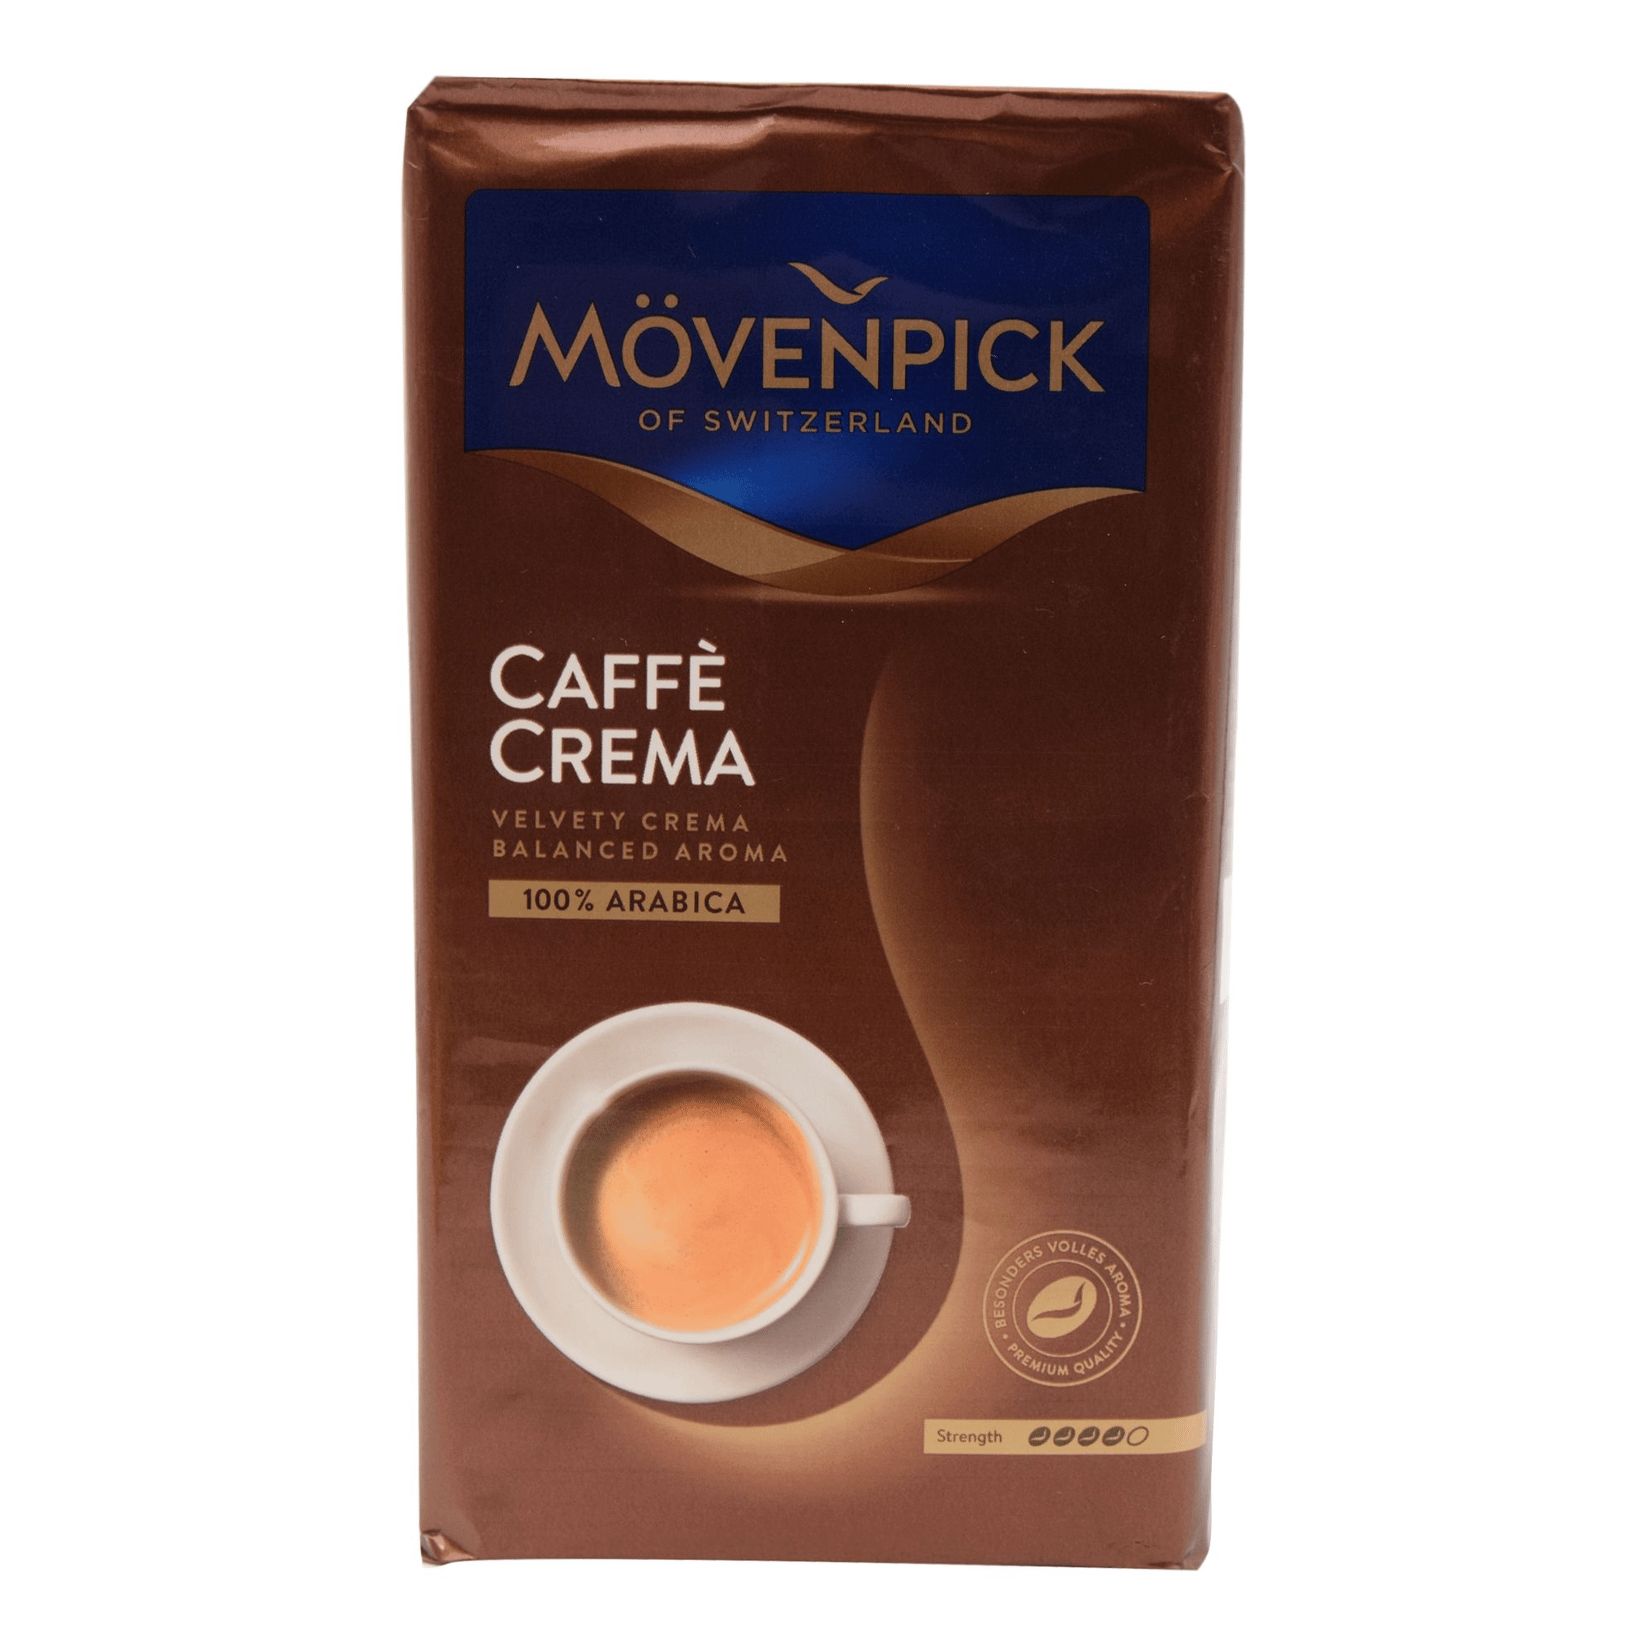 Кофе молотый 500г. Movenpick Caffe crema. Кофе в зернах Movenpick Caffe crema 500г. Кофе Movenpick молотый 500г. Кофе Movenpick 500г молотый в ассортименте.